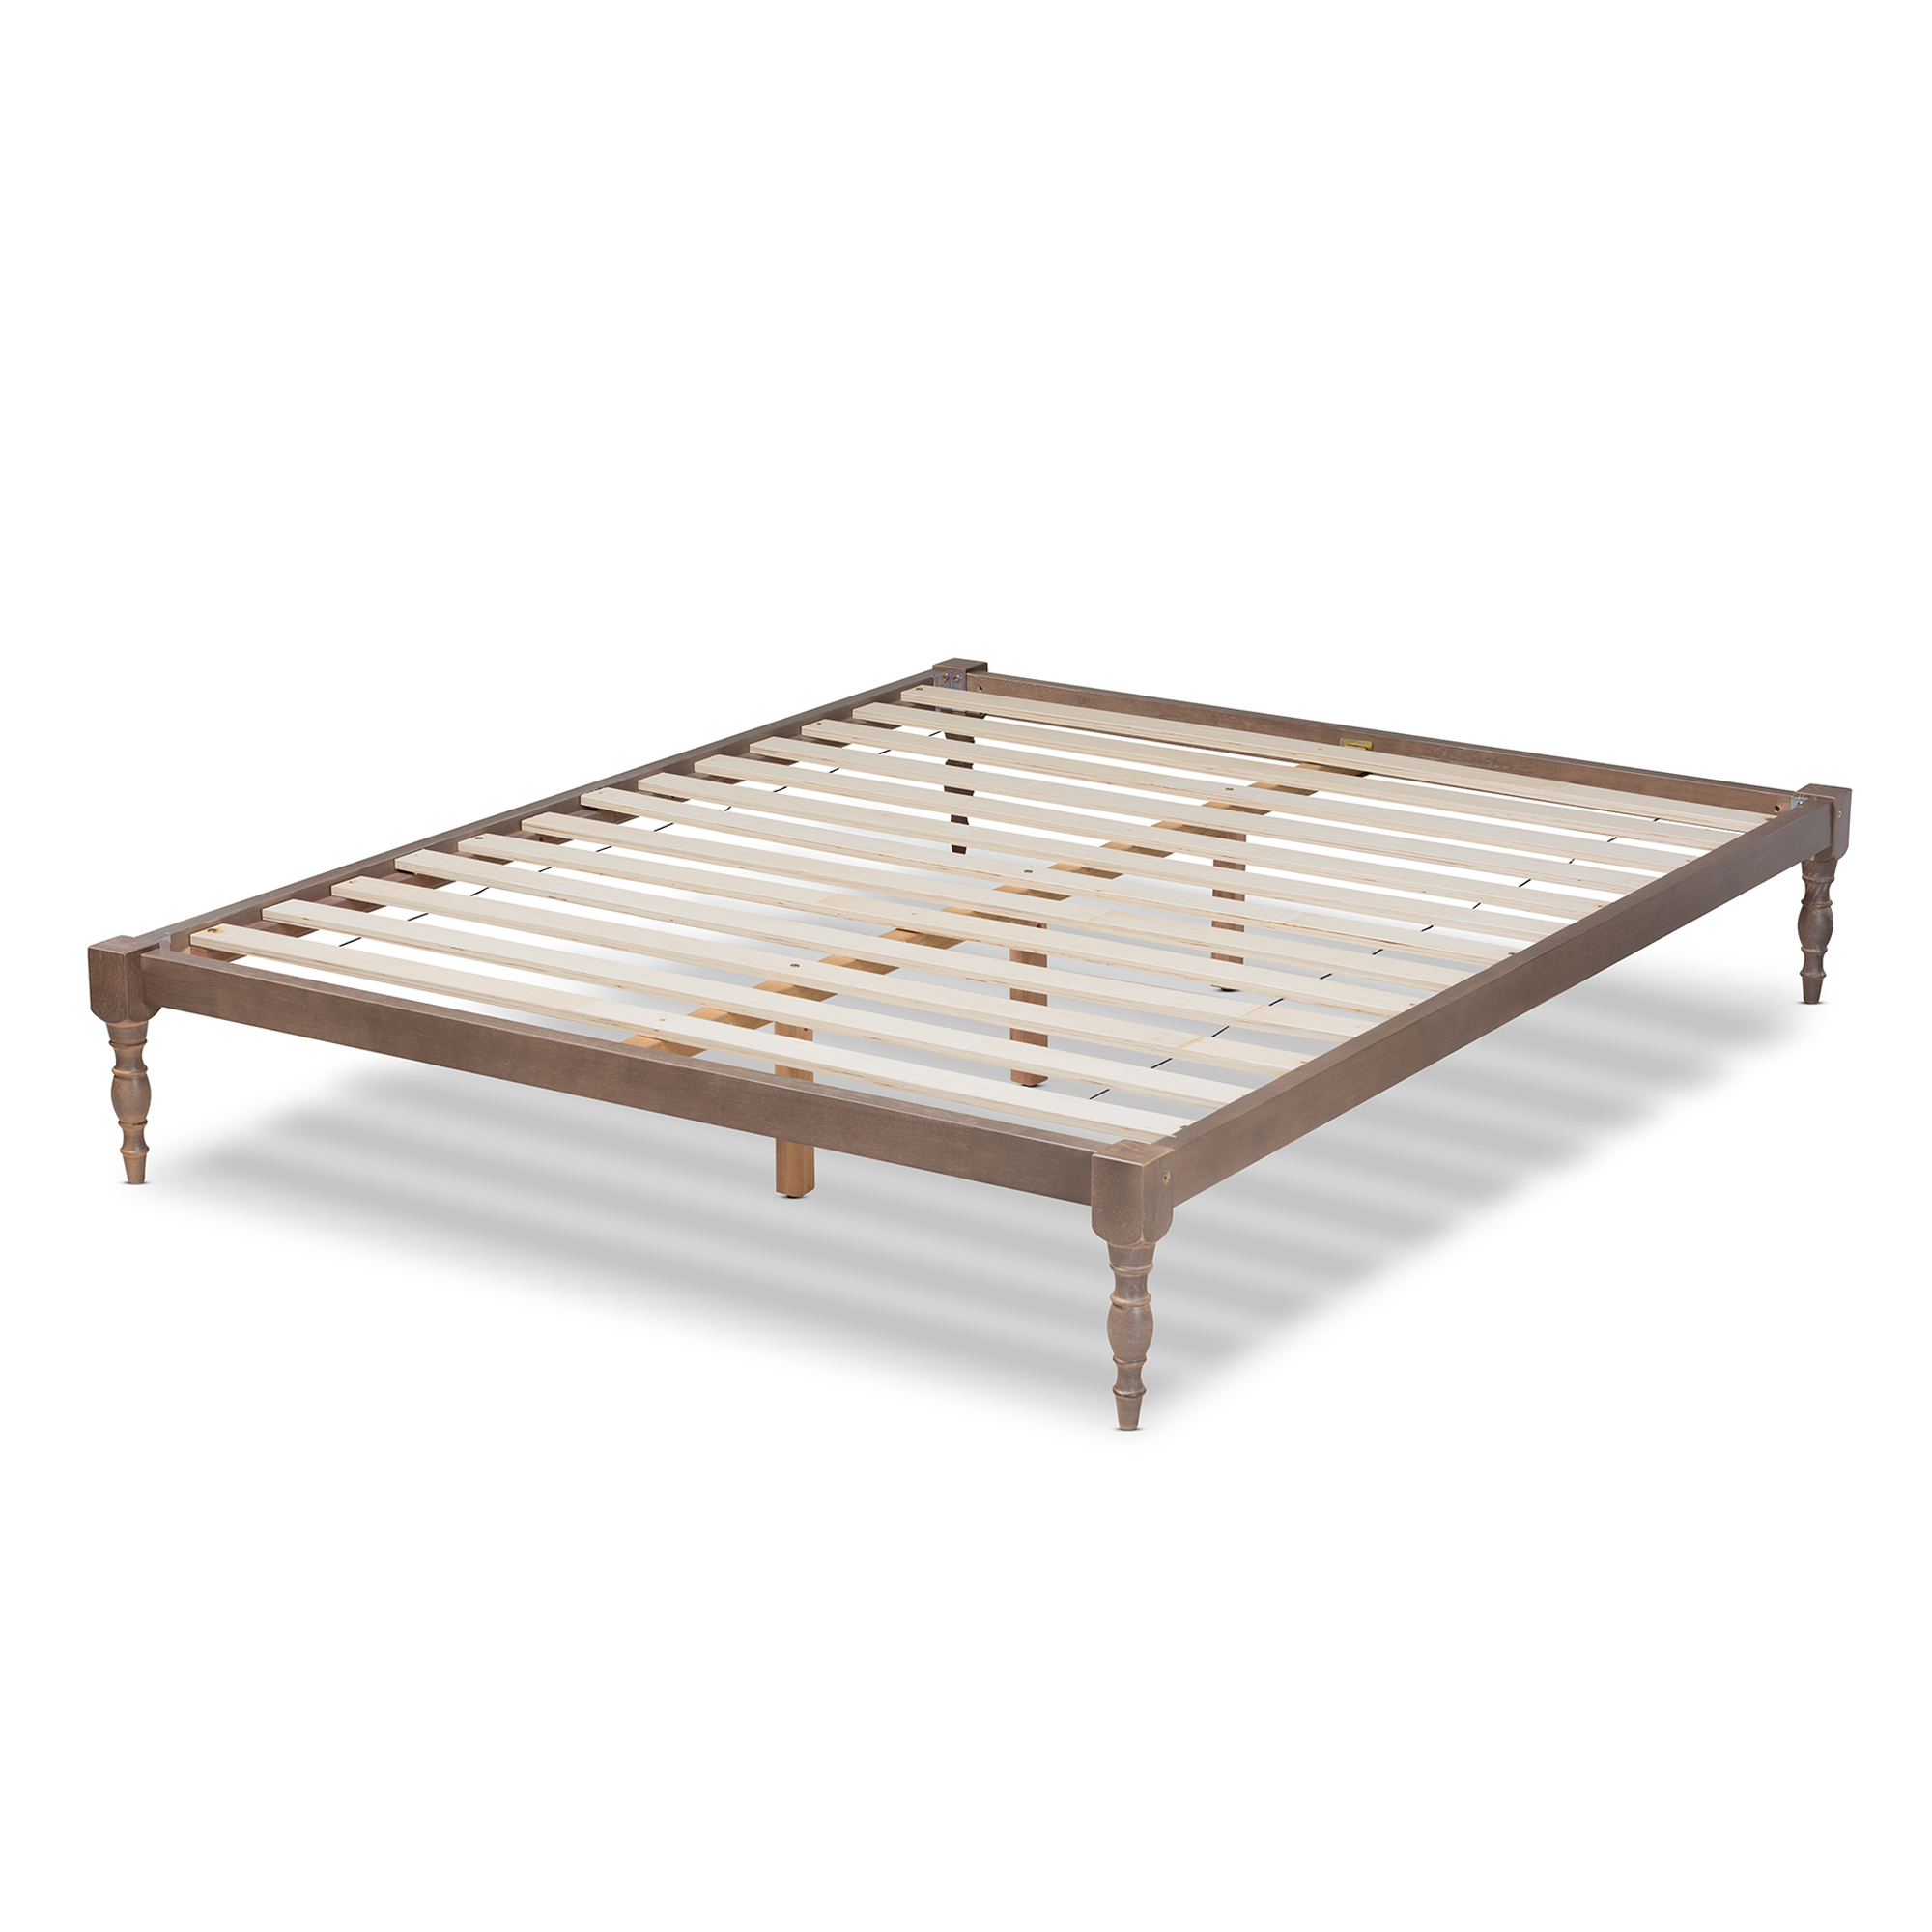 Baxton Studio Iseline Modern and Contemporary Antique Oak Finished Wood Full Size Platform Bed Frame - image 3 of 9